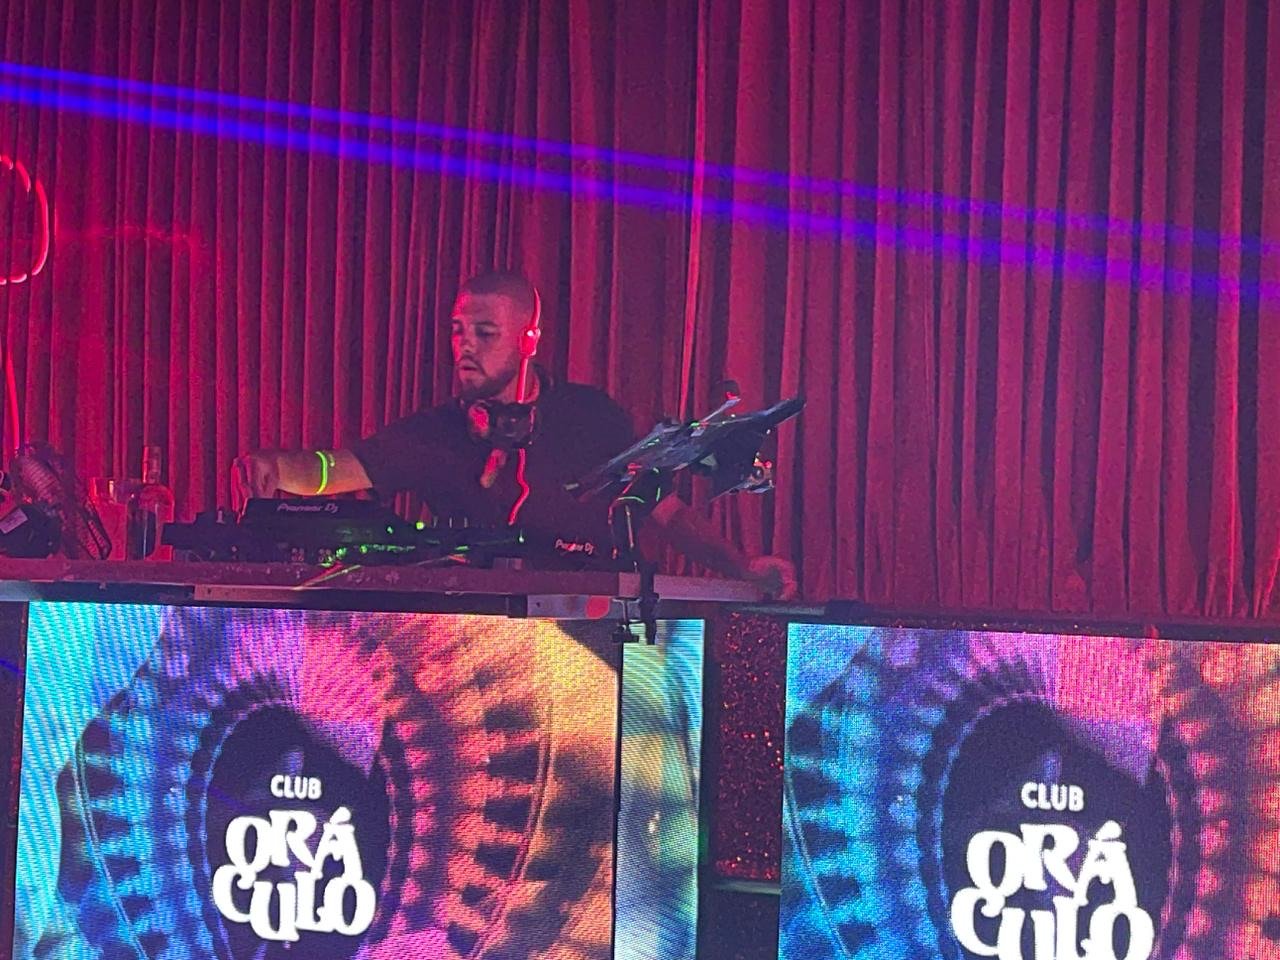 Club Oraculo DJ.jpg